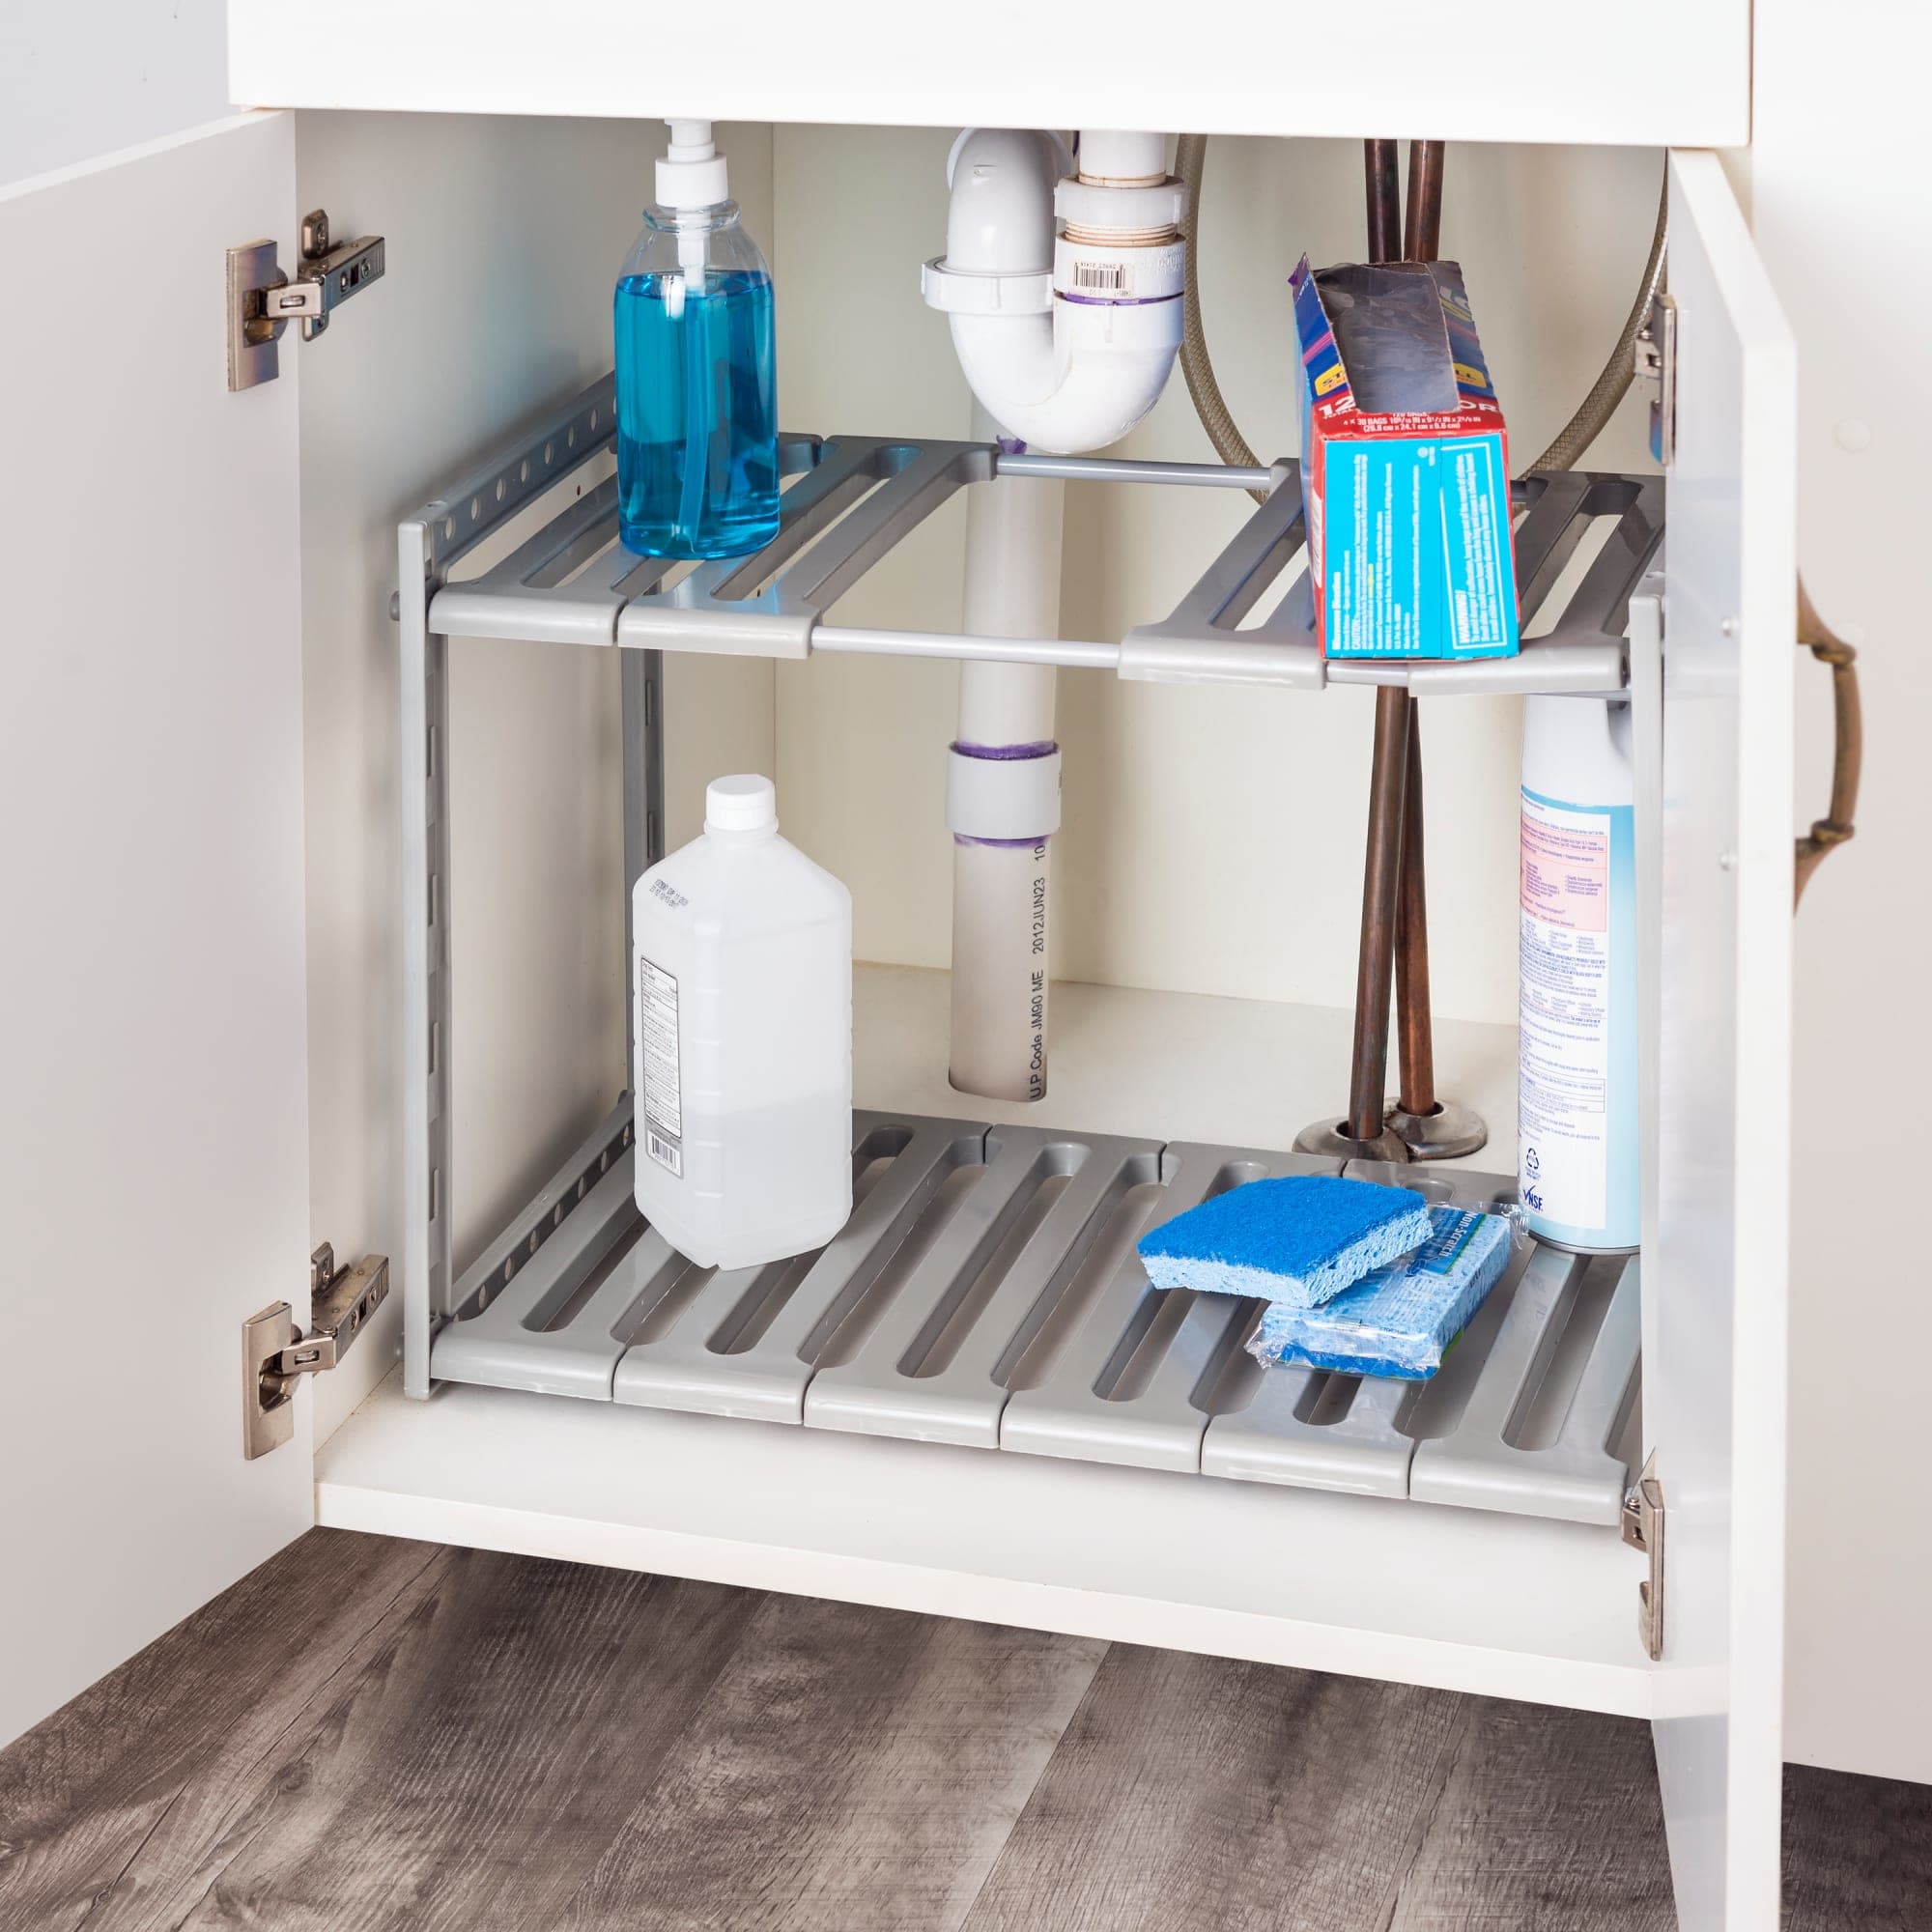 Home Basics 2 Tier Adjustable Multi-Functional Plastic Under Sink Organizer, Grey $10.00 EACH, CASE PACK OF 8